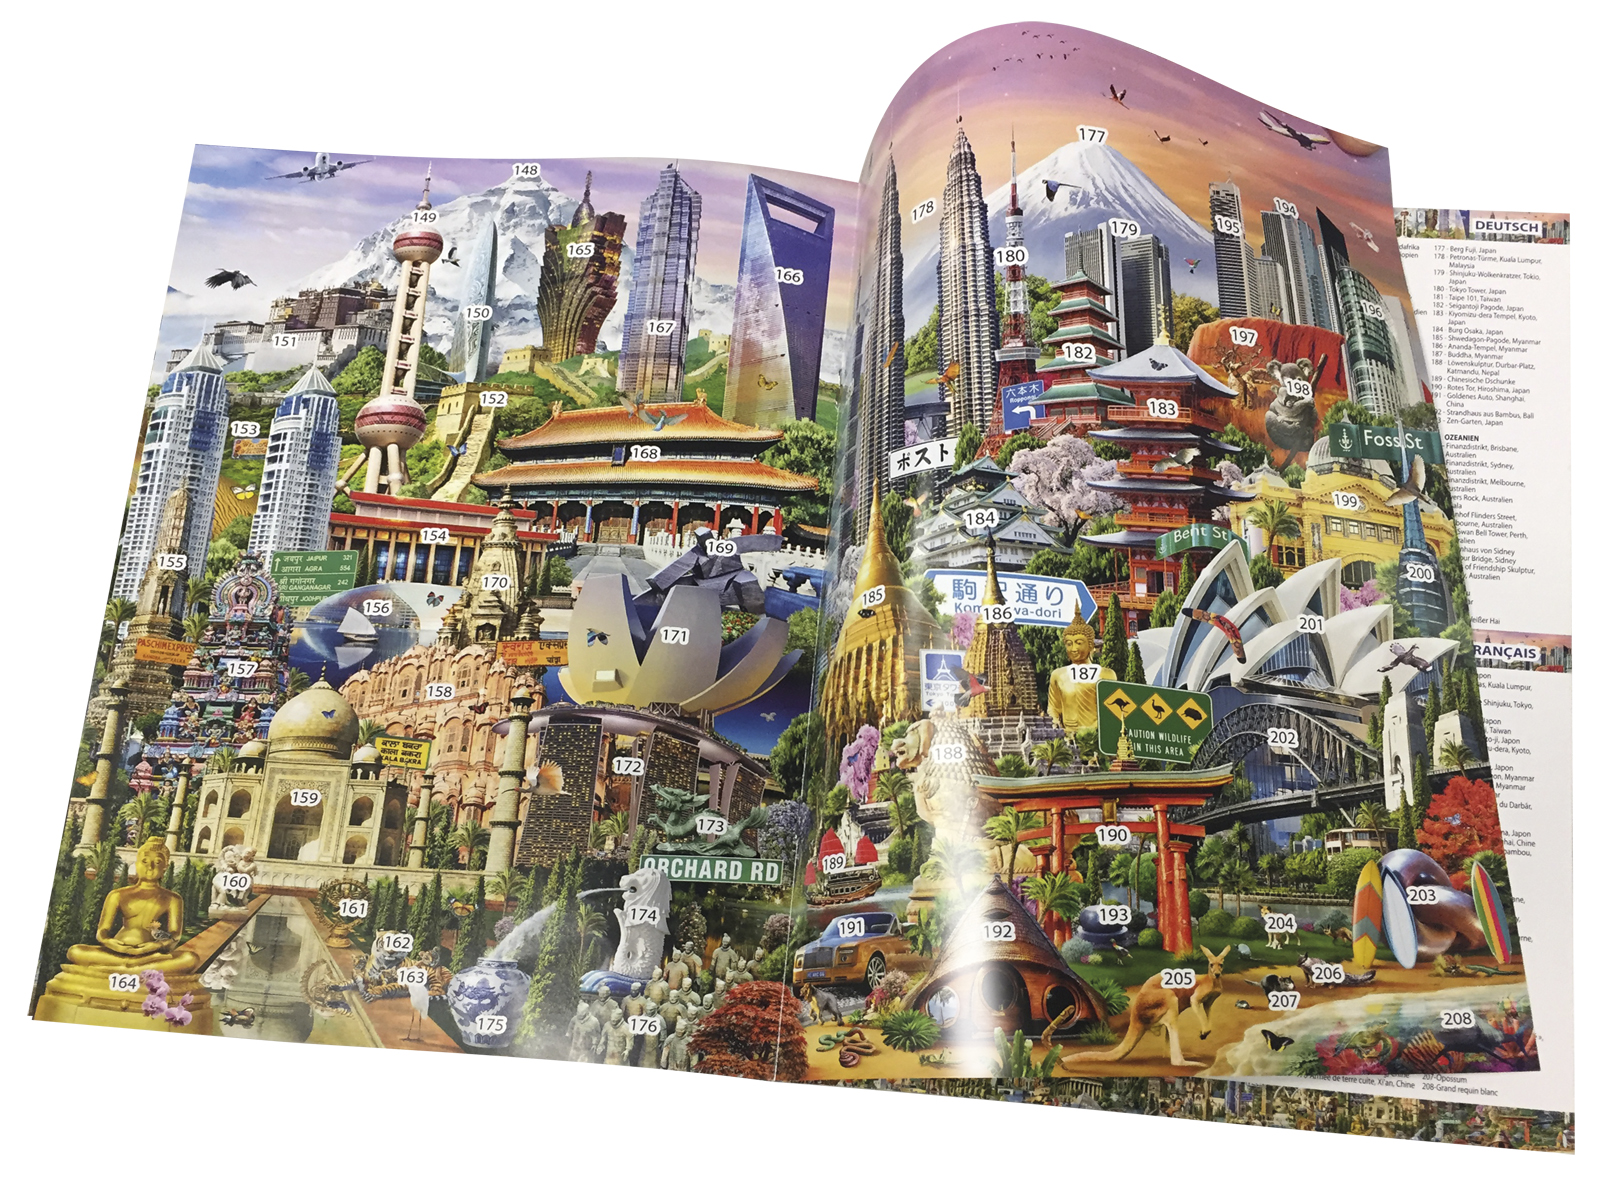 Educa borras 42000 Pieces Around The World Puzzle